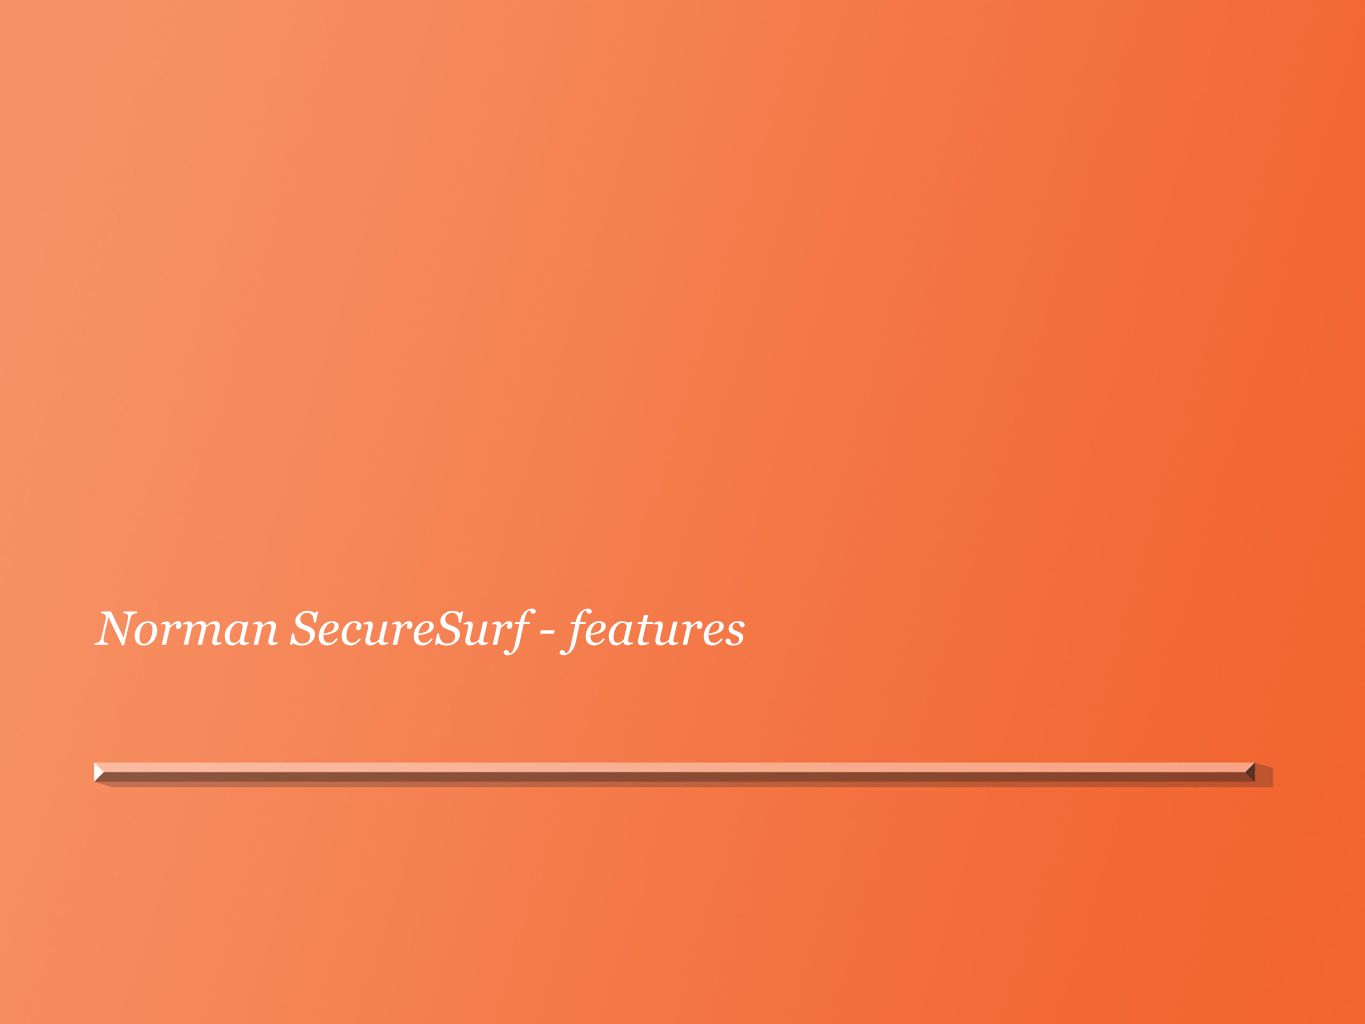 Norman SecureSurf - features